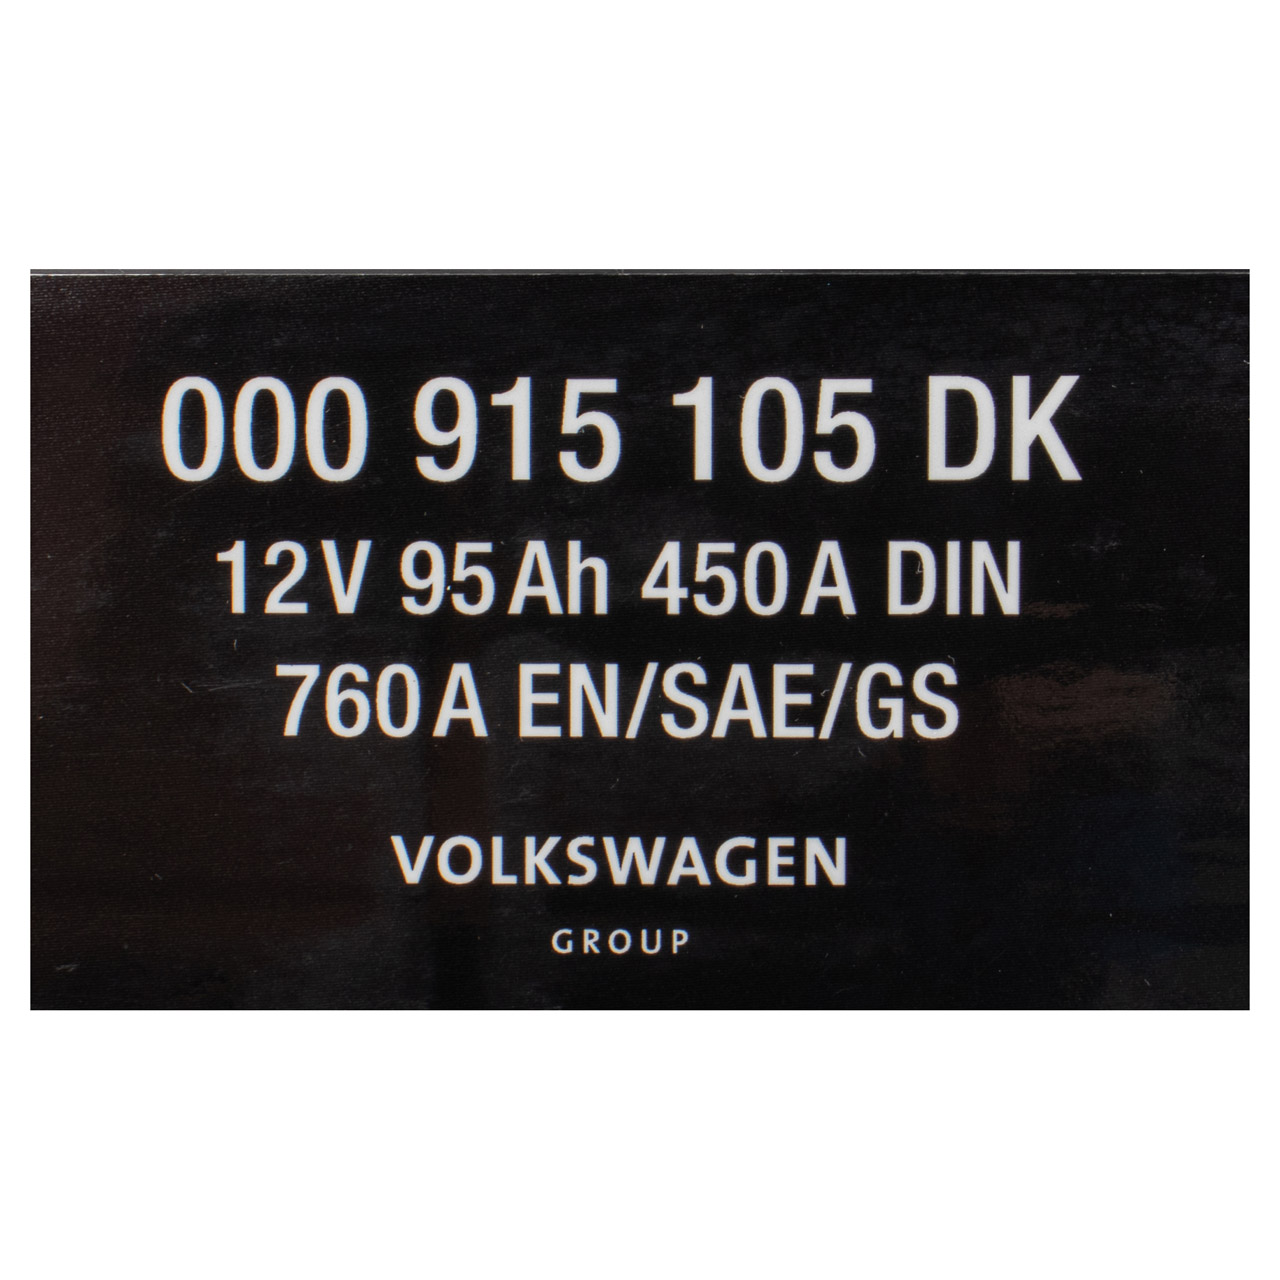 ORIGINAL VW Autobatterie Batterie Starterbatterie 12V 95Ah 450/760A 000915105DK